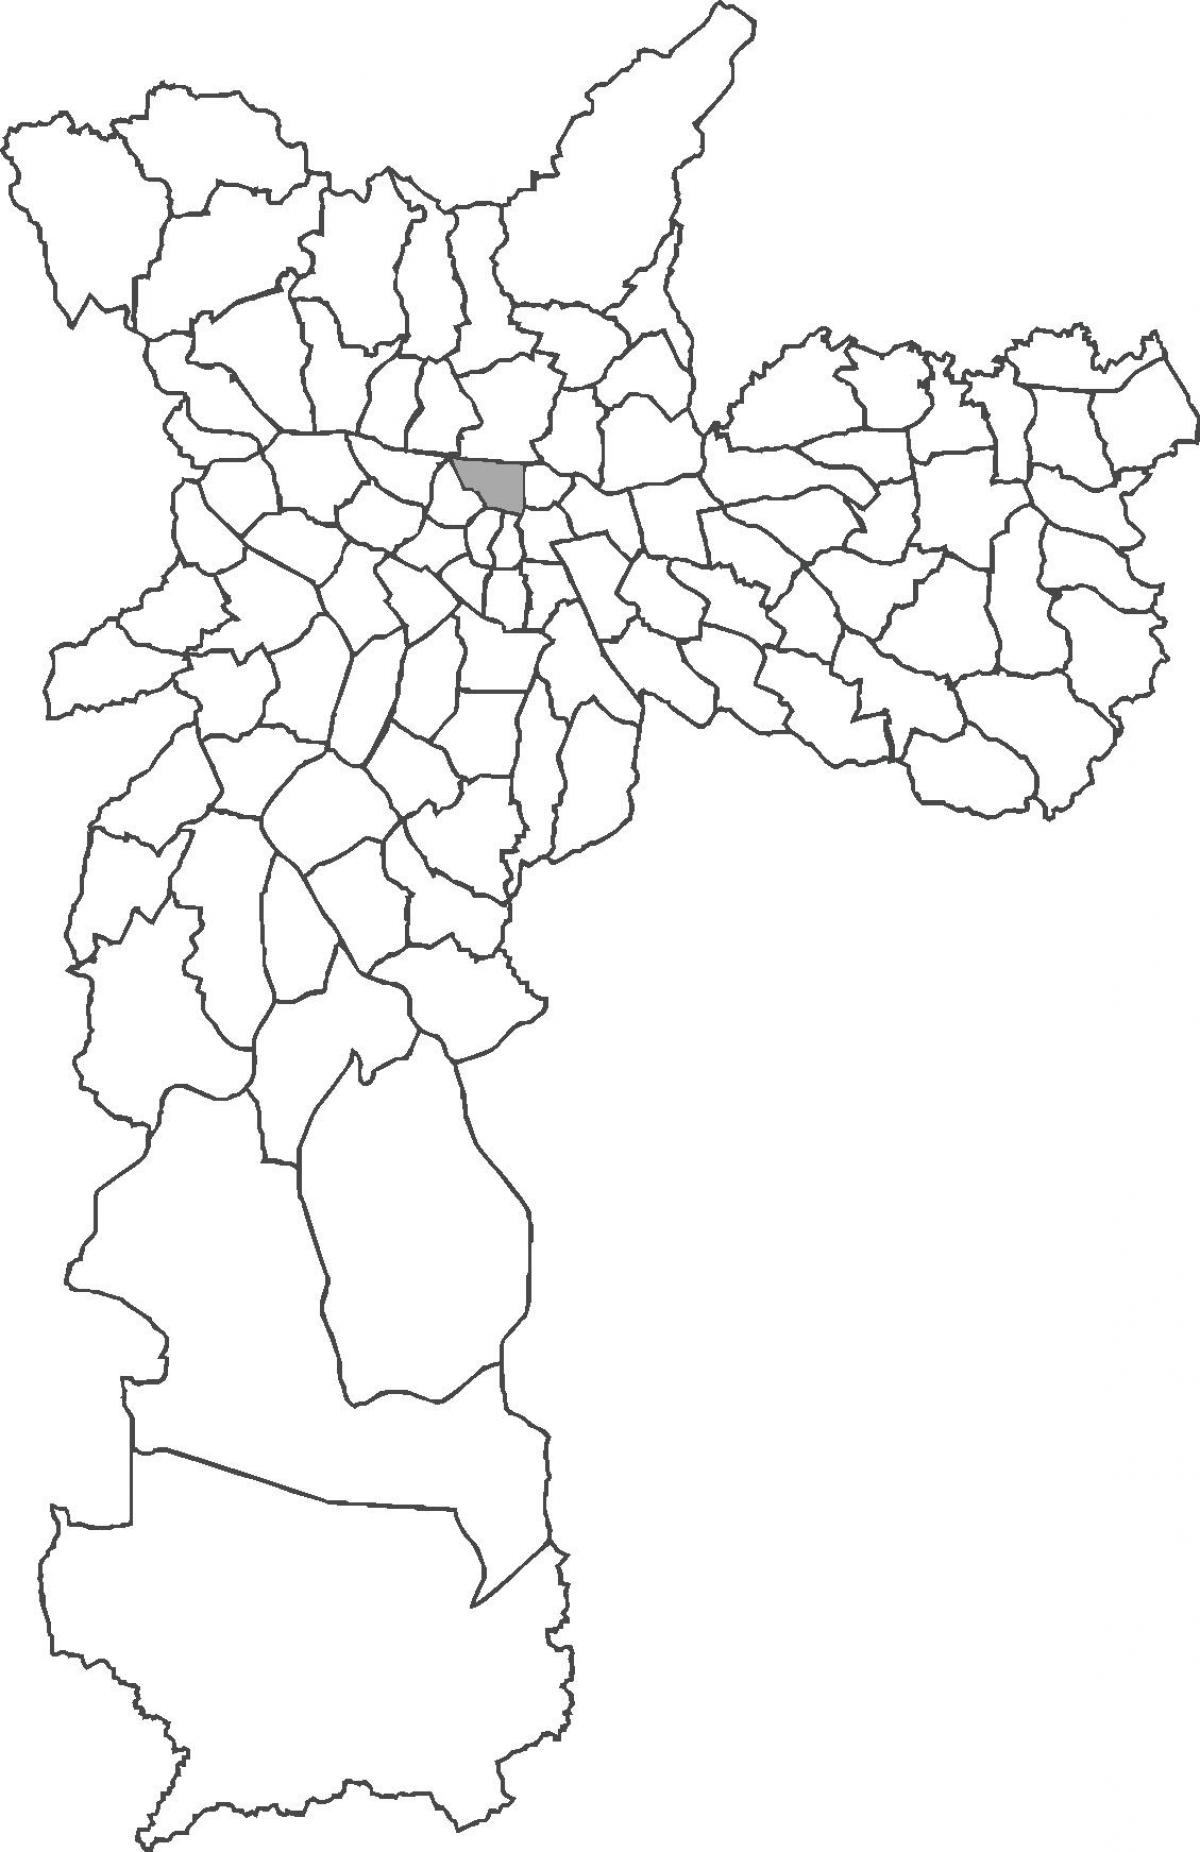 Kart Bom Ретиро rayonu